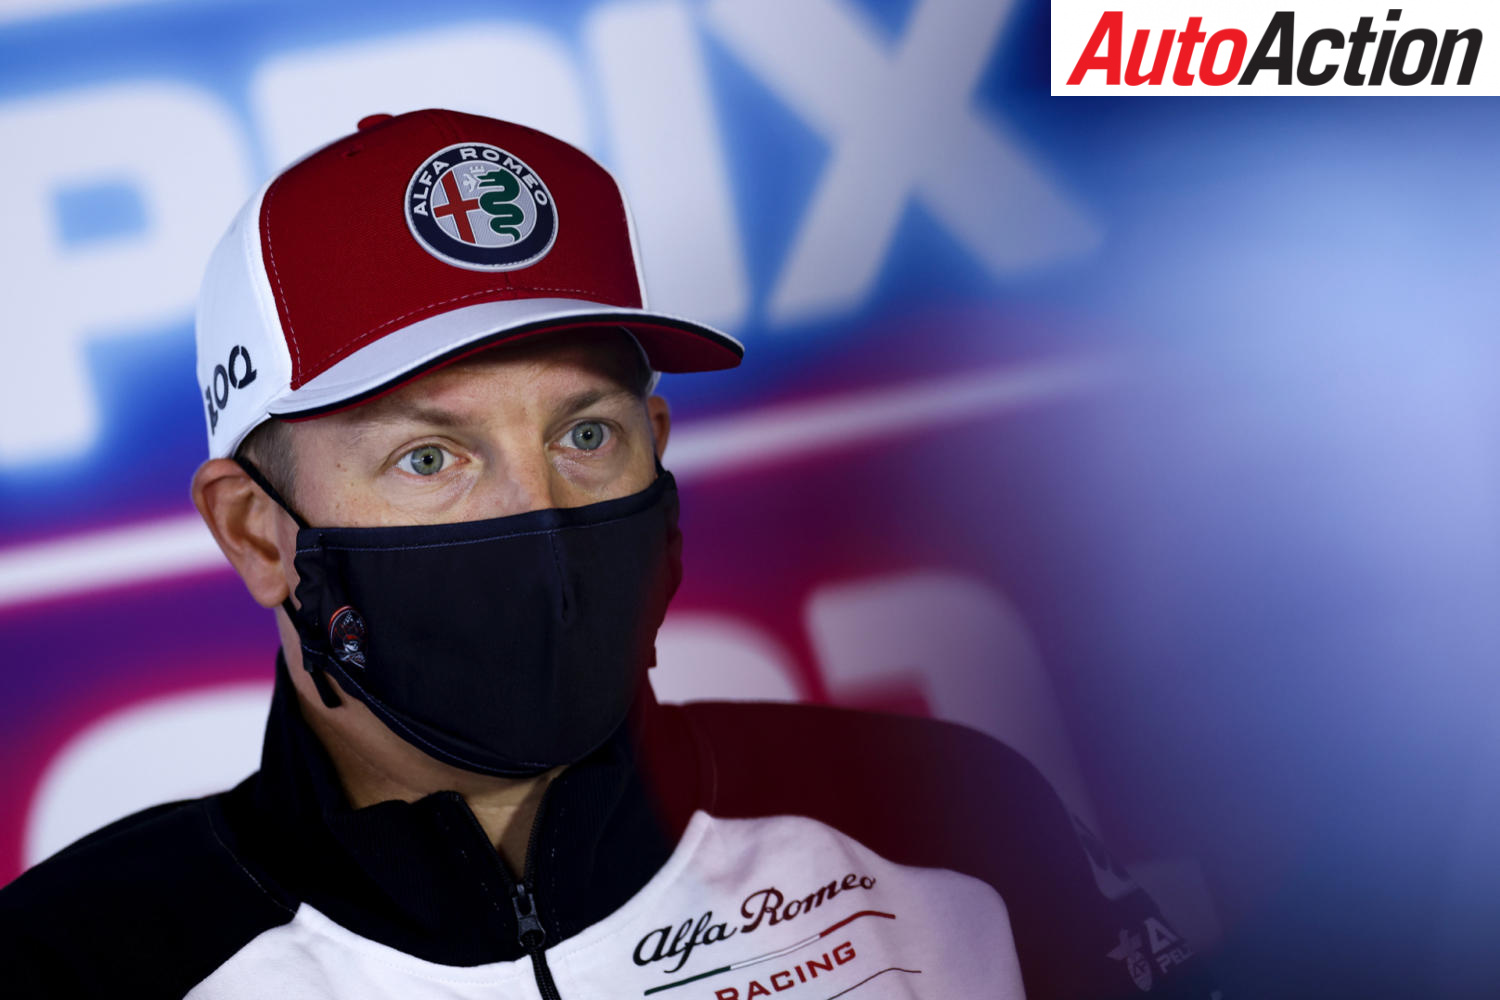 Kimi Raikkonen to miss Dutch GP after positive test - Image: Motorsport Images